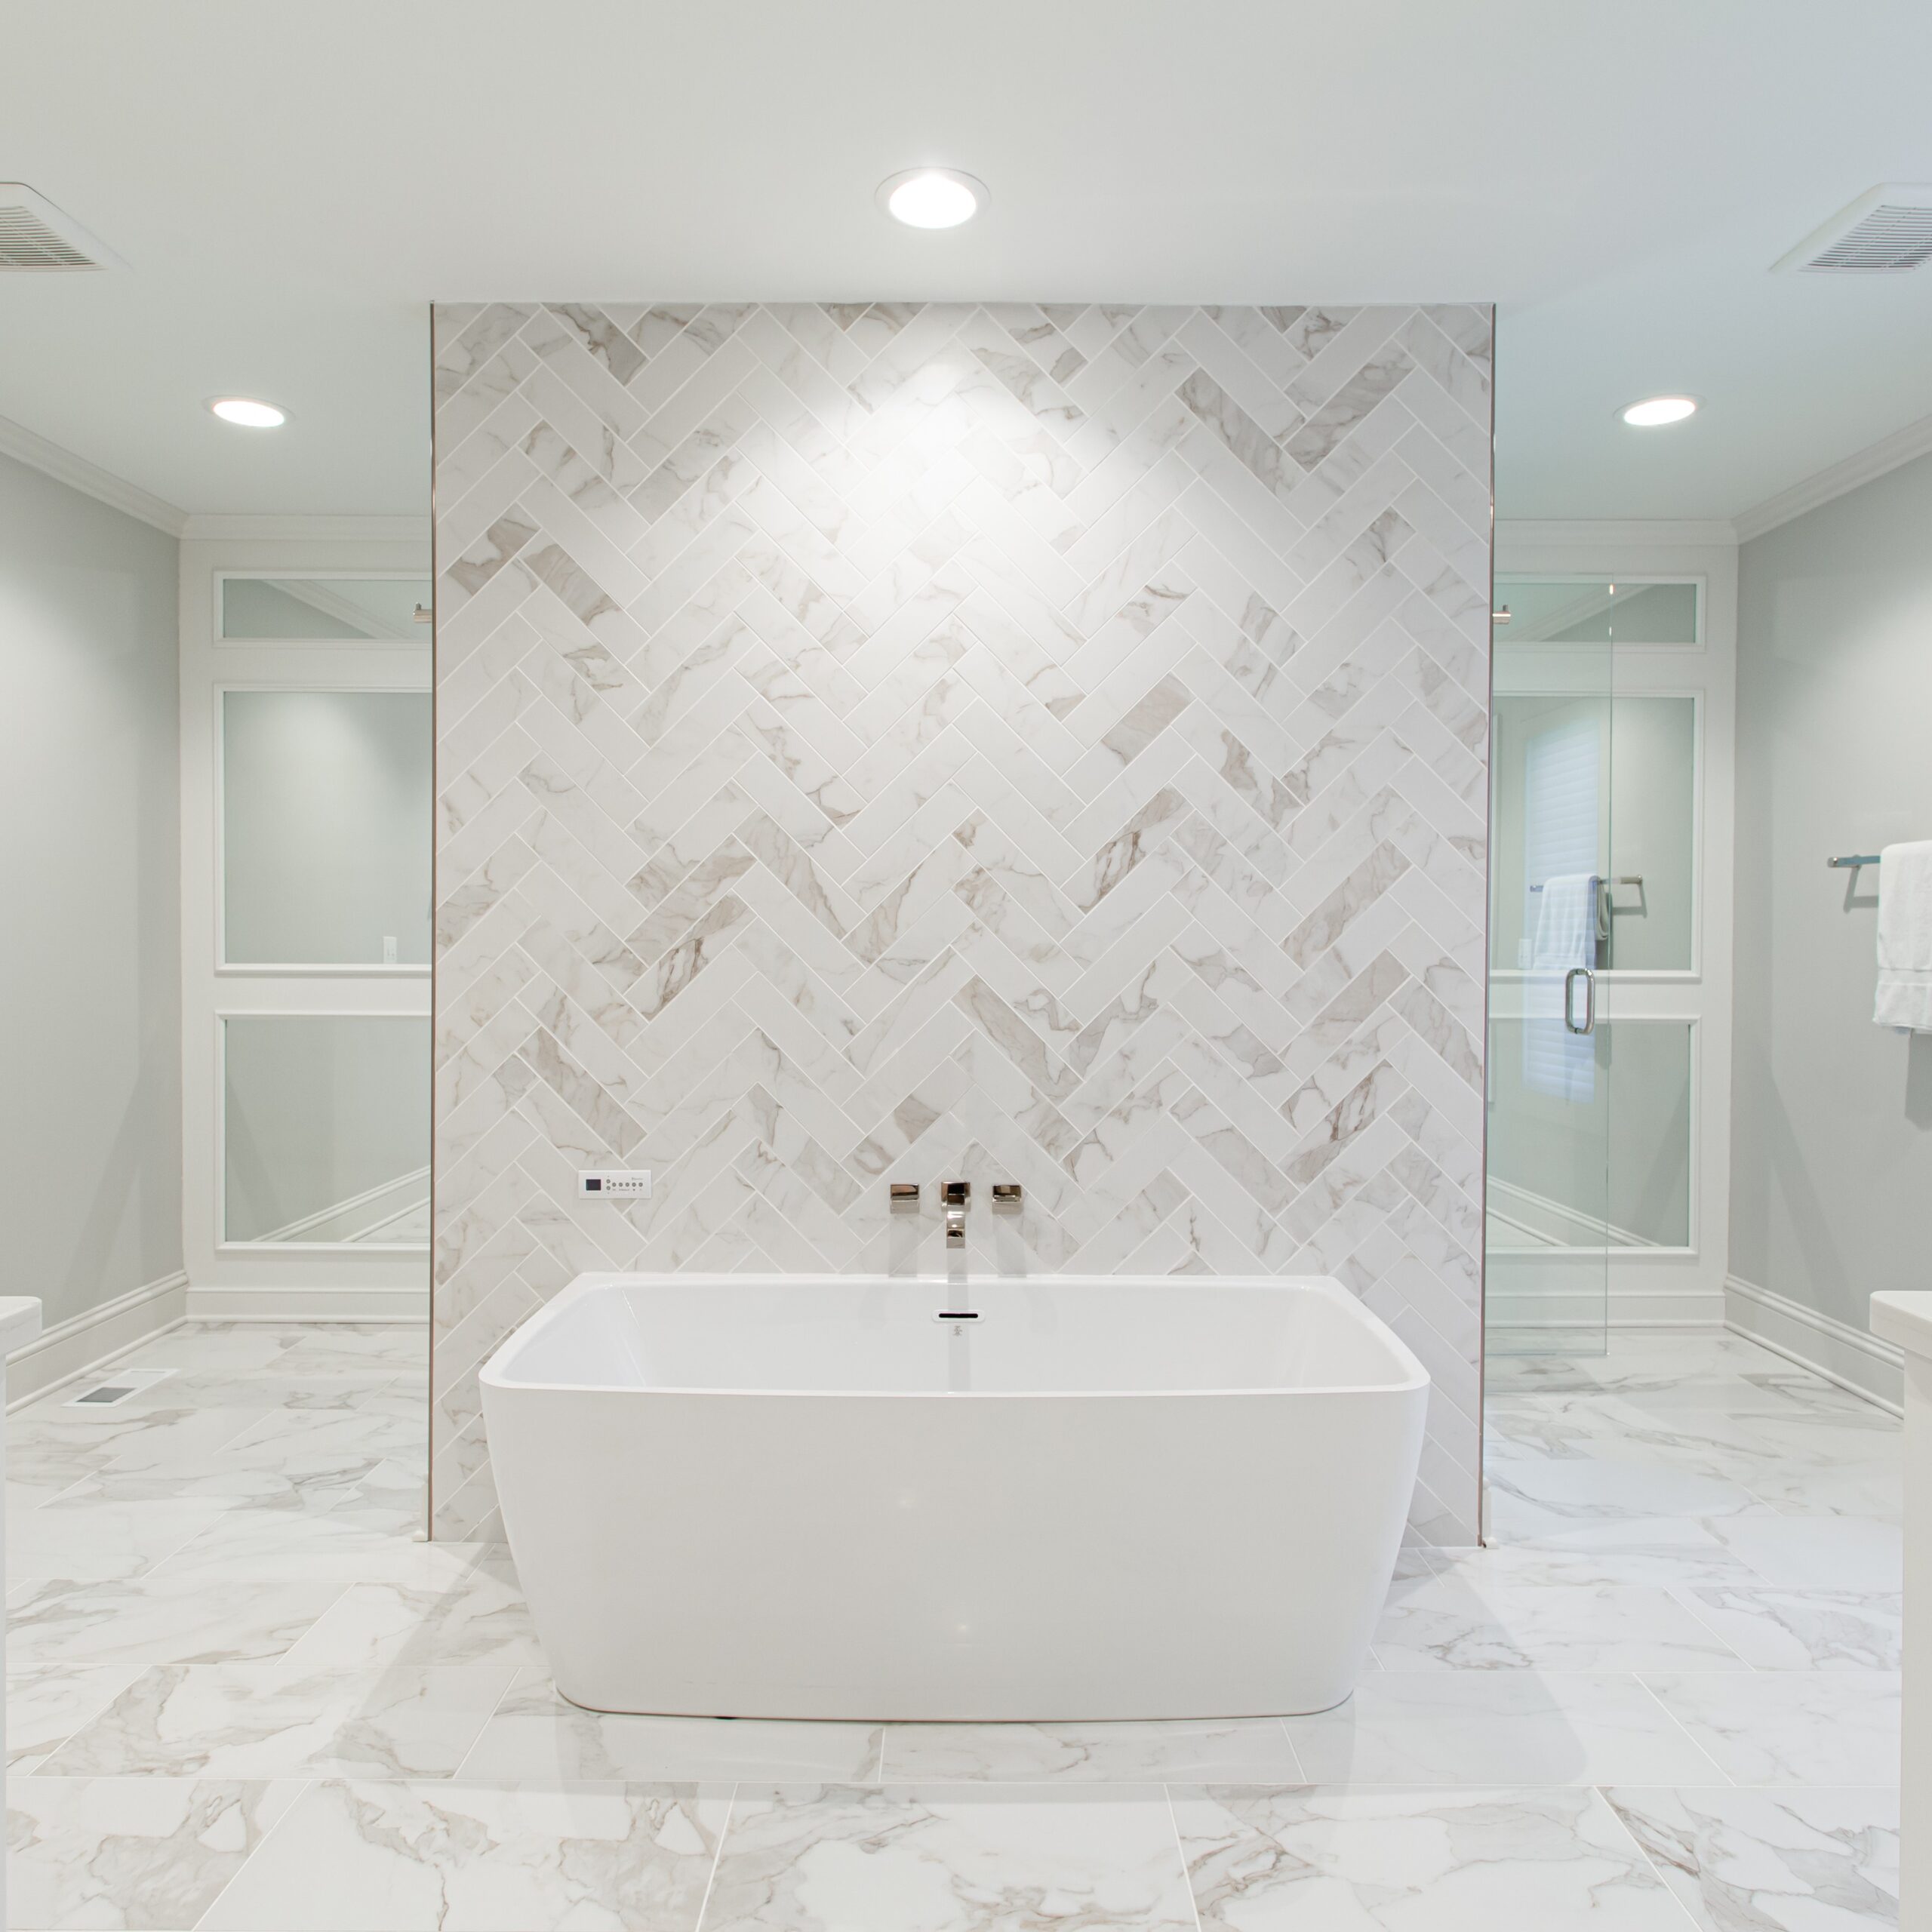 2021 HBA CLEVELAND CHOICE AWARDS 1st Place Best Bathroom Renovation OVER $75,000